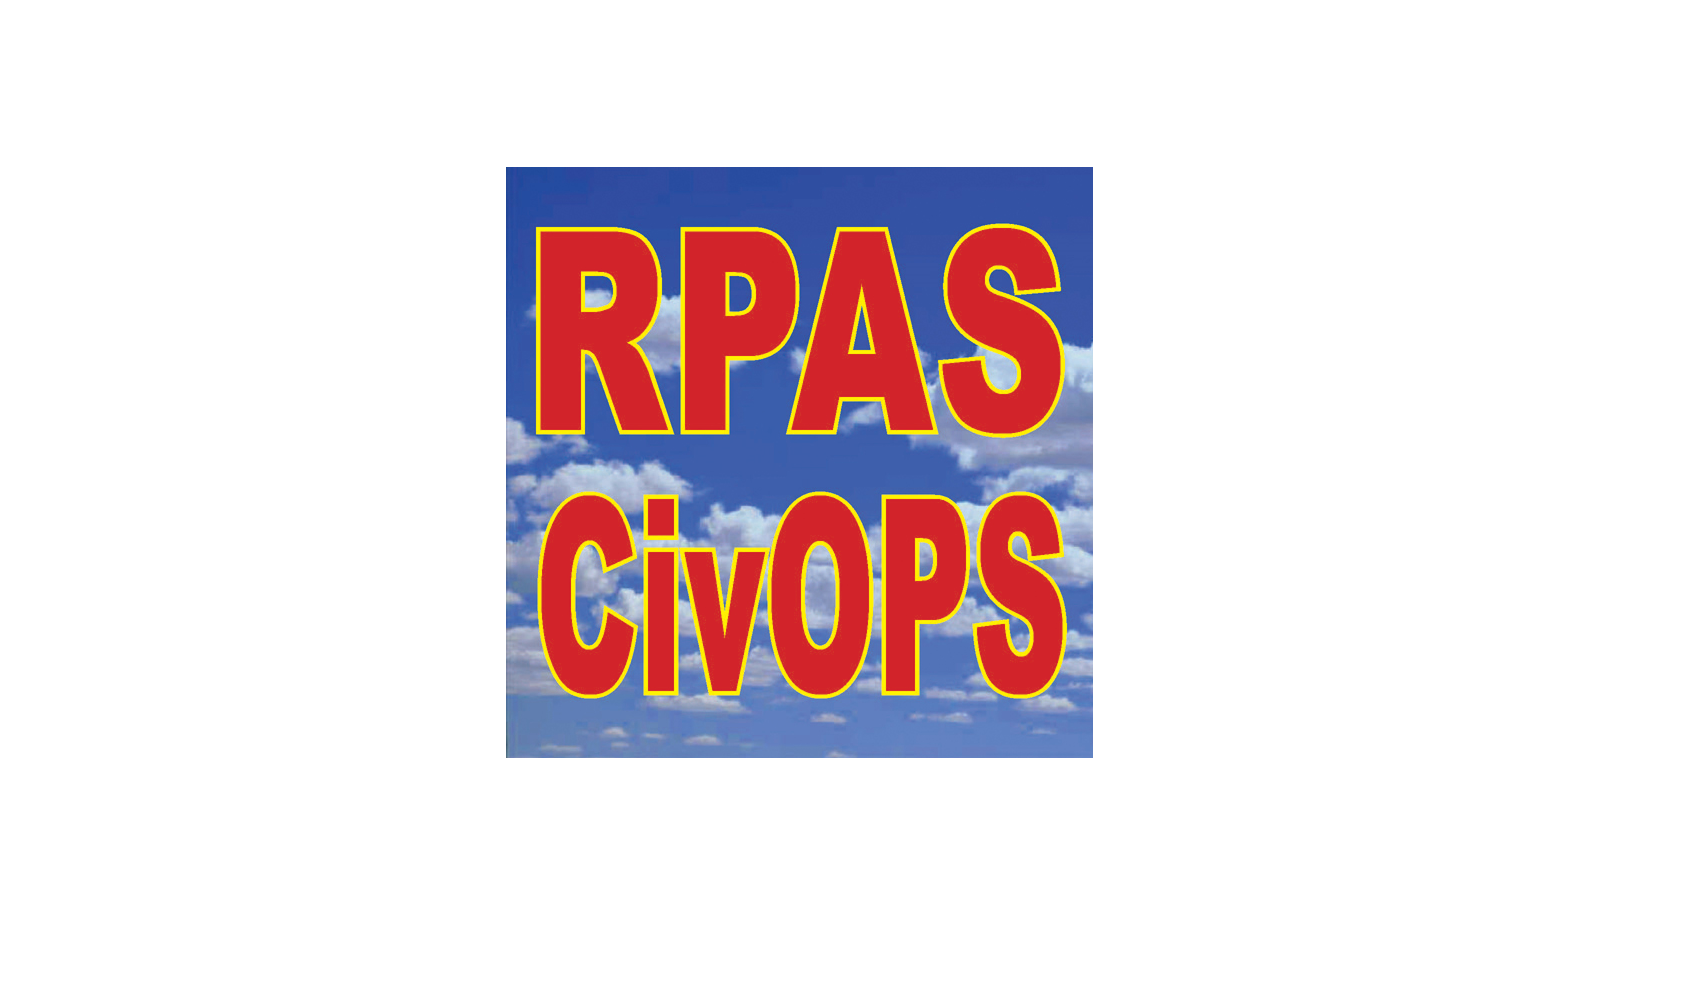 RPAS CivOps 2019, Spain